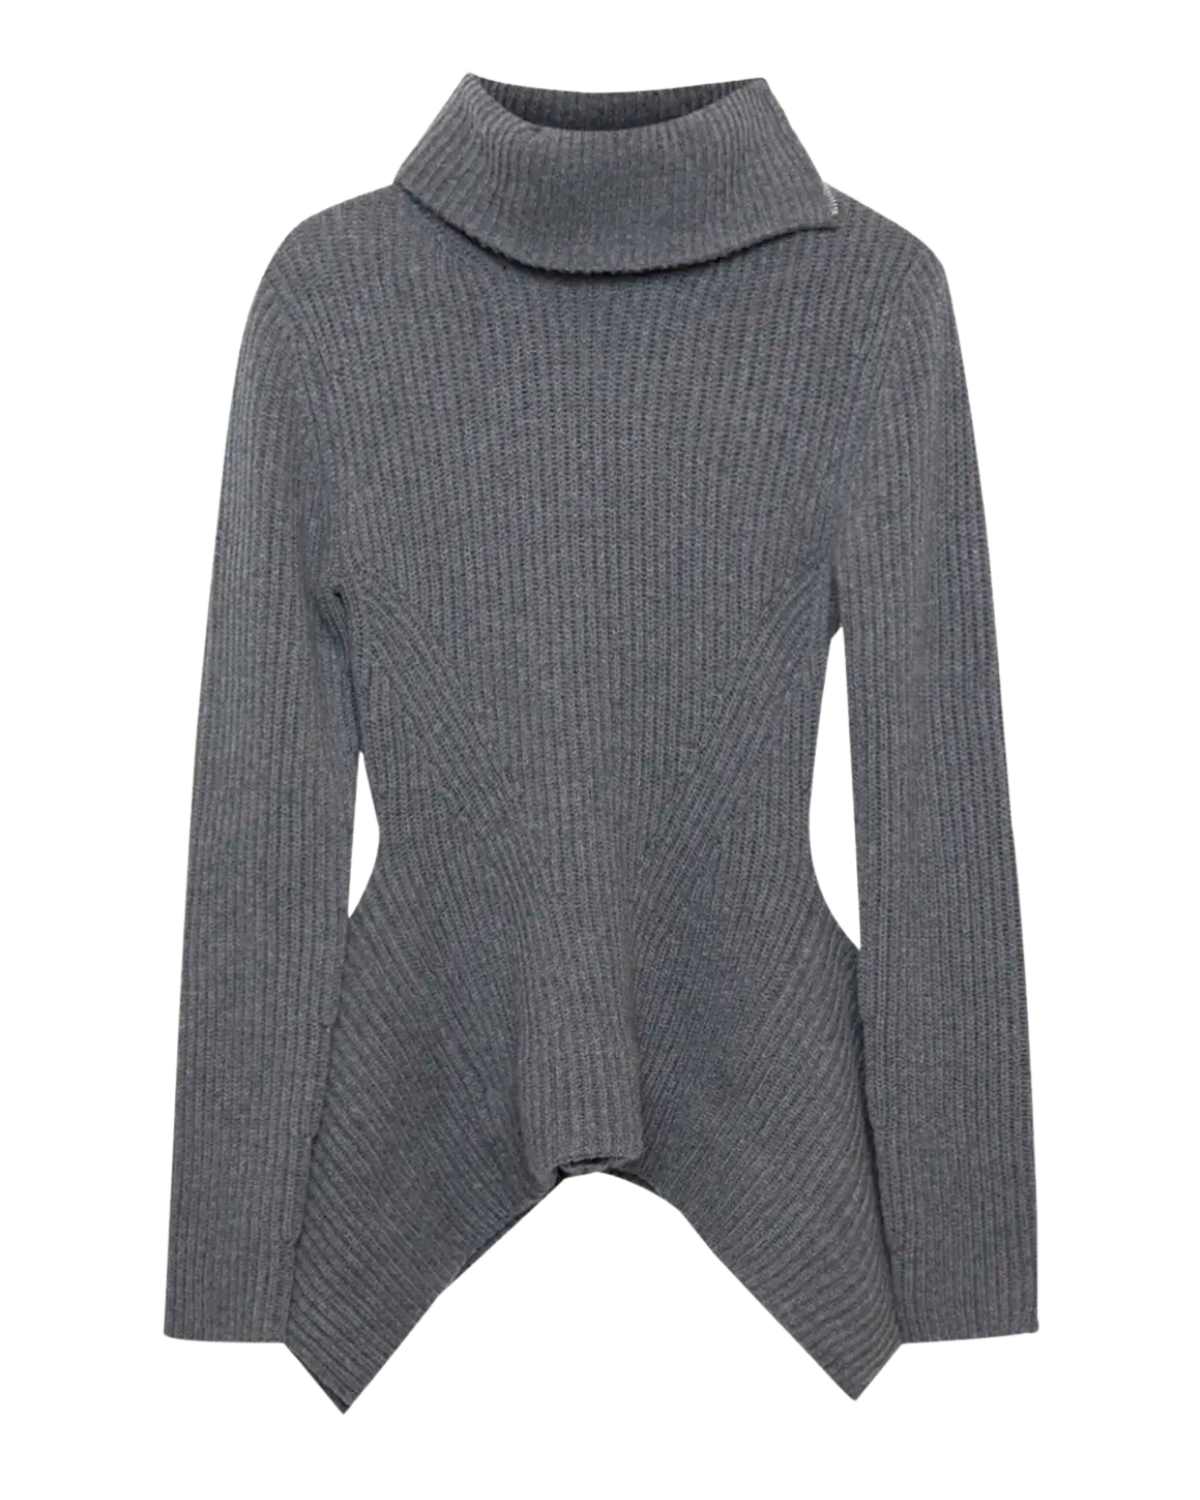 Keyara Foldover Peplum Sweater (Charcoal Melange)